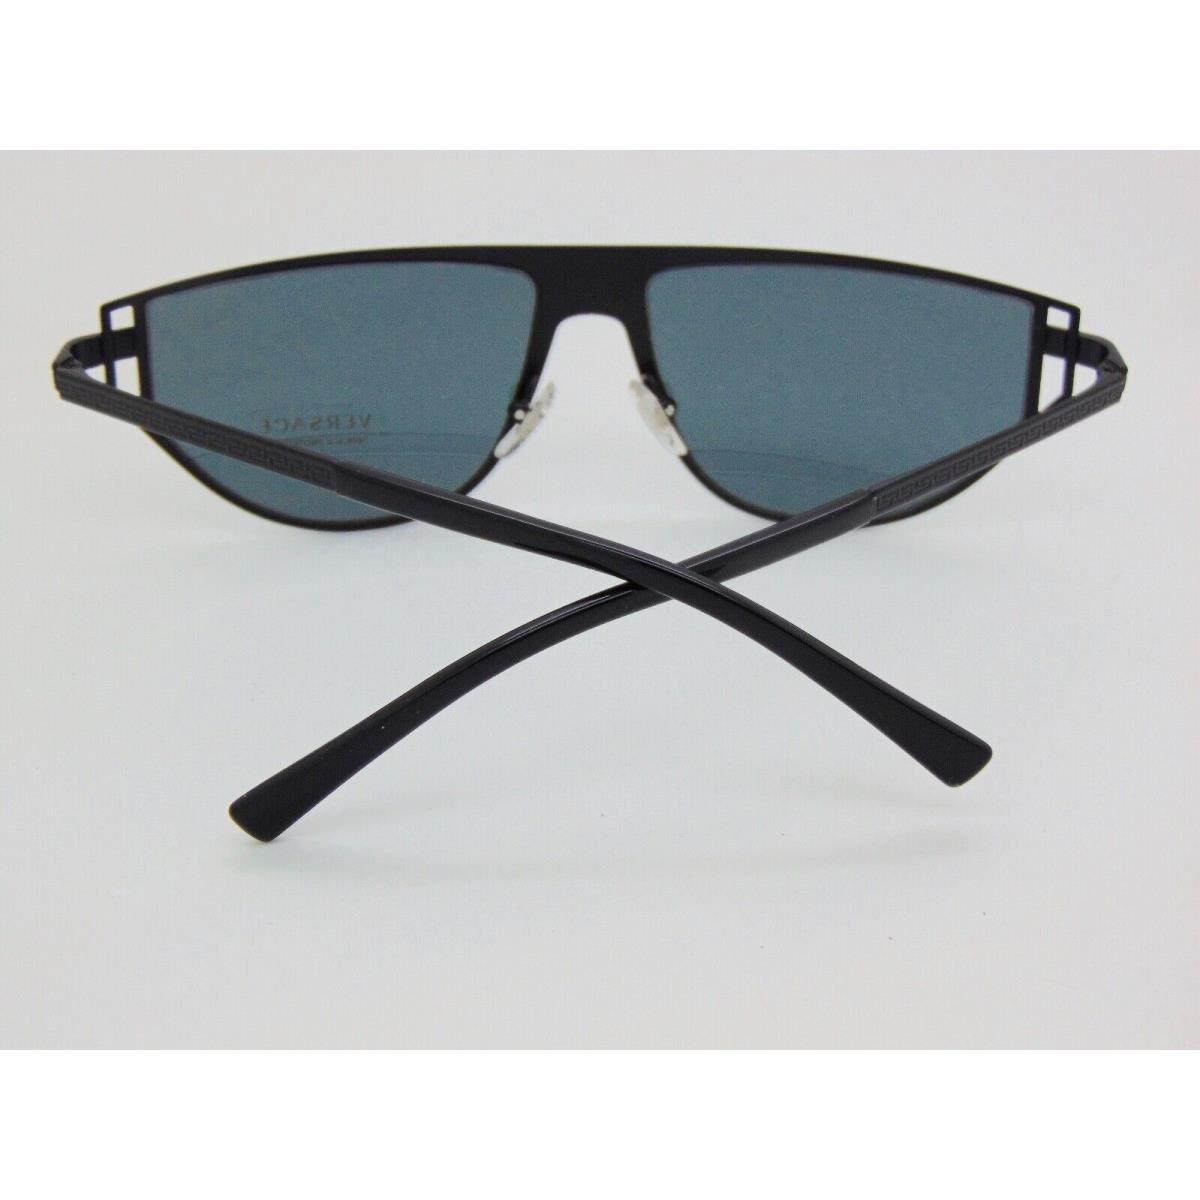 Versace sunglasses  - Matte Black Frame, Grey Lens 1